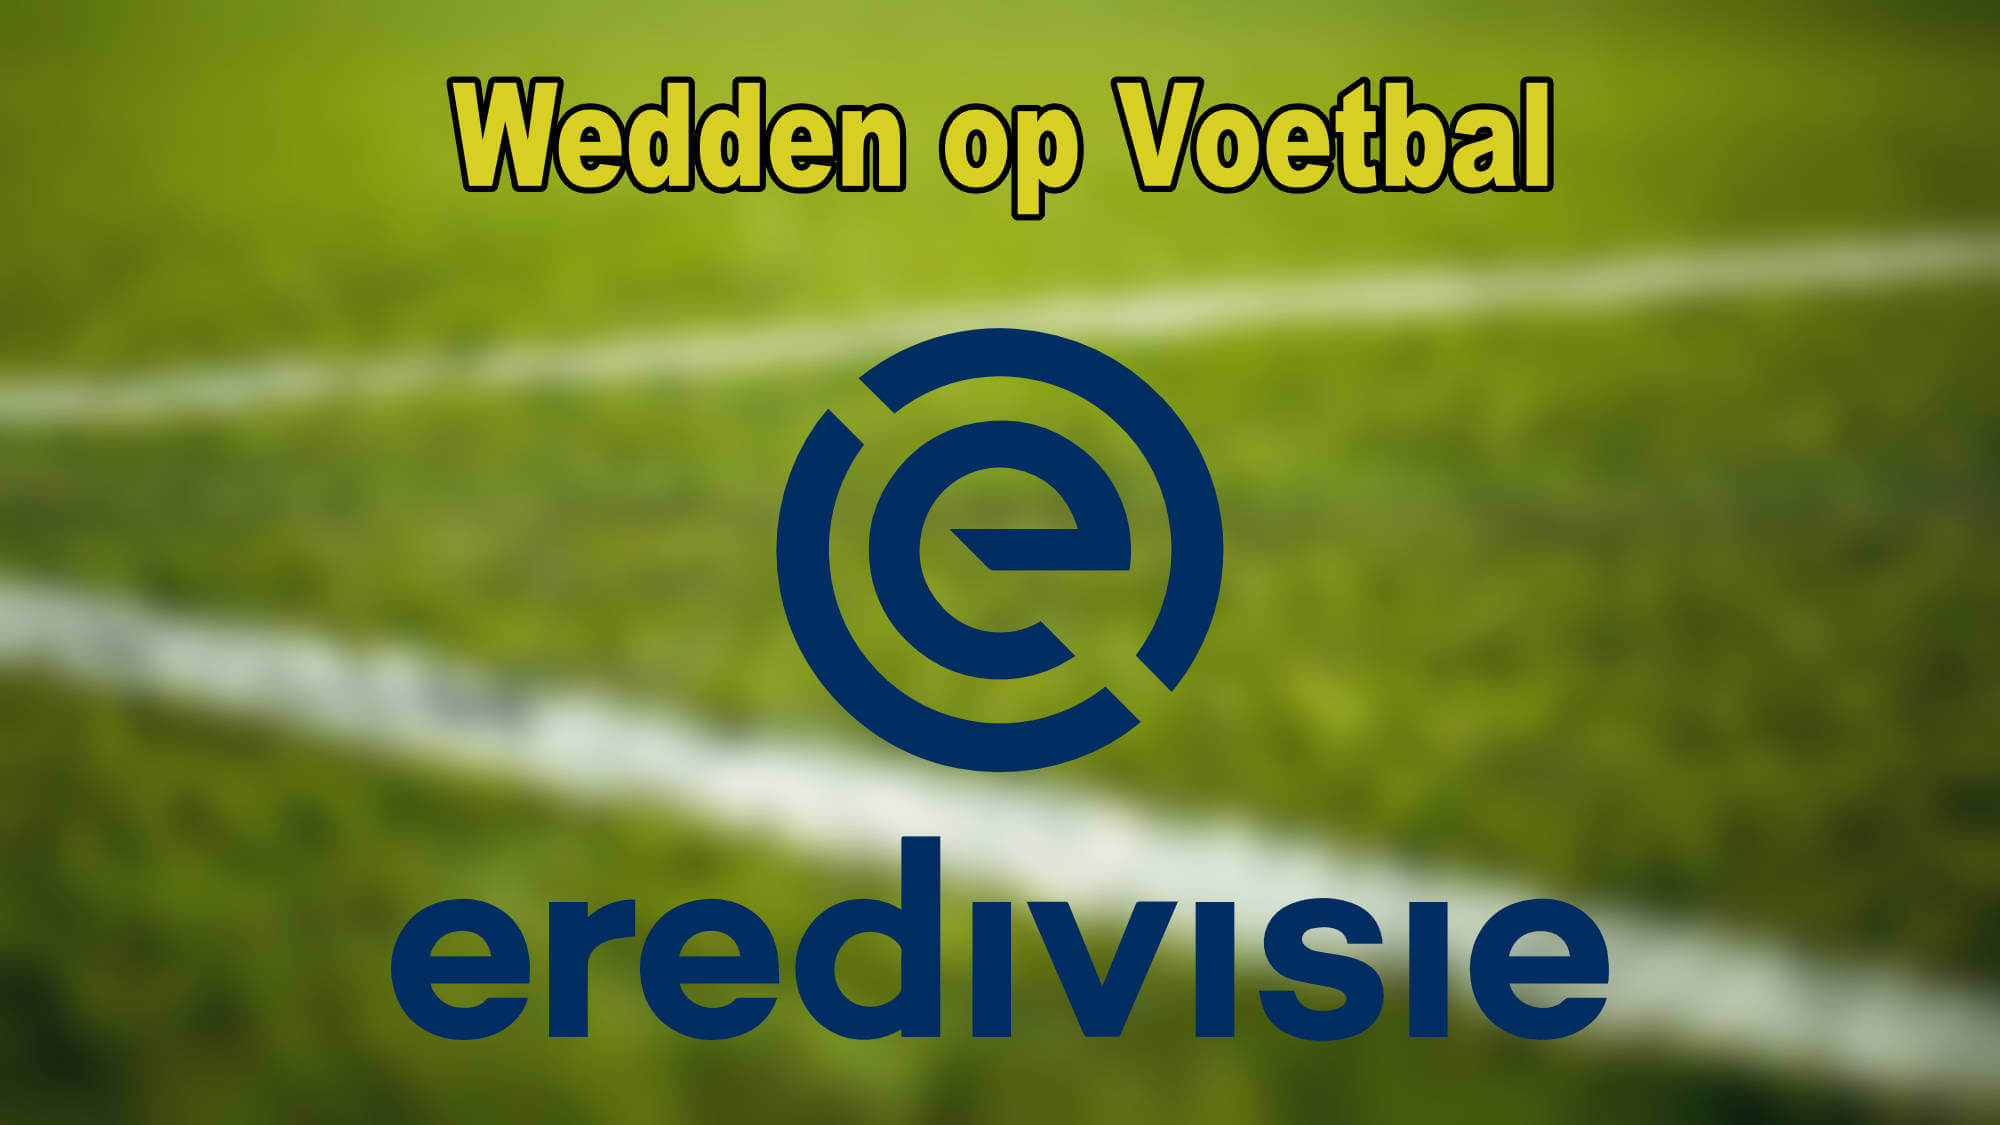 Wedden Op Voetbal Eredivisie